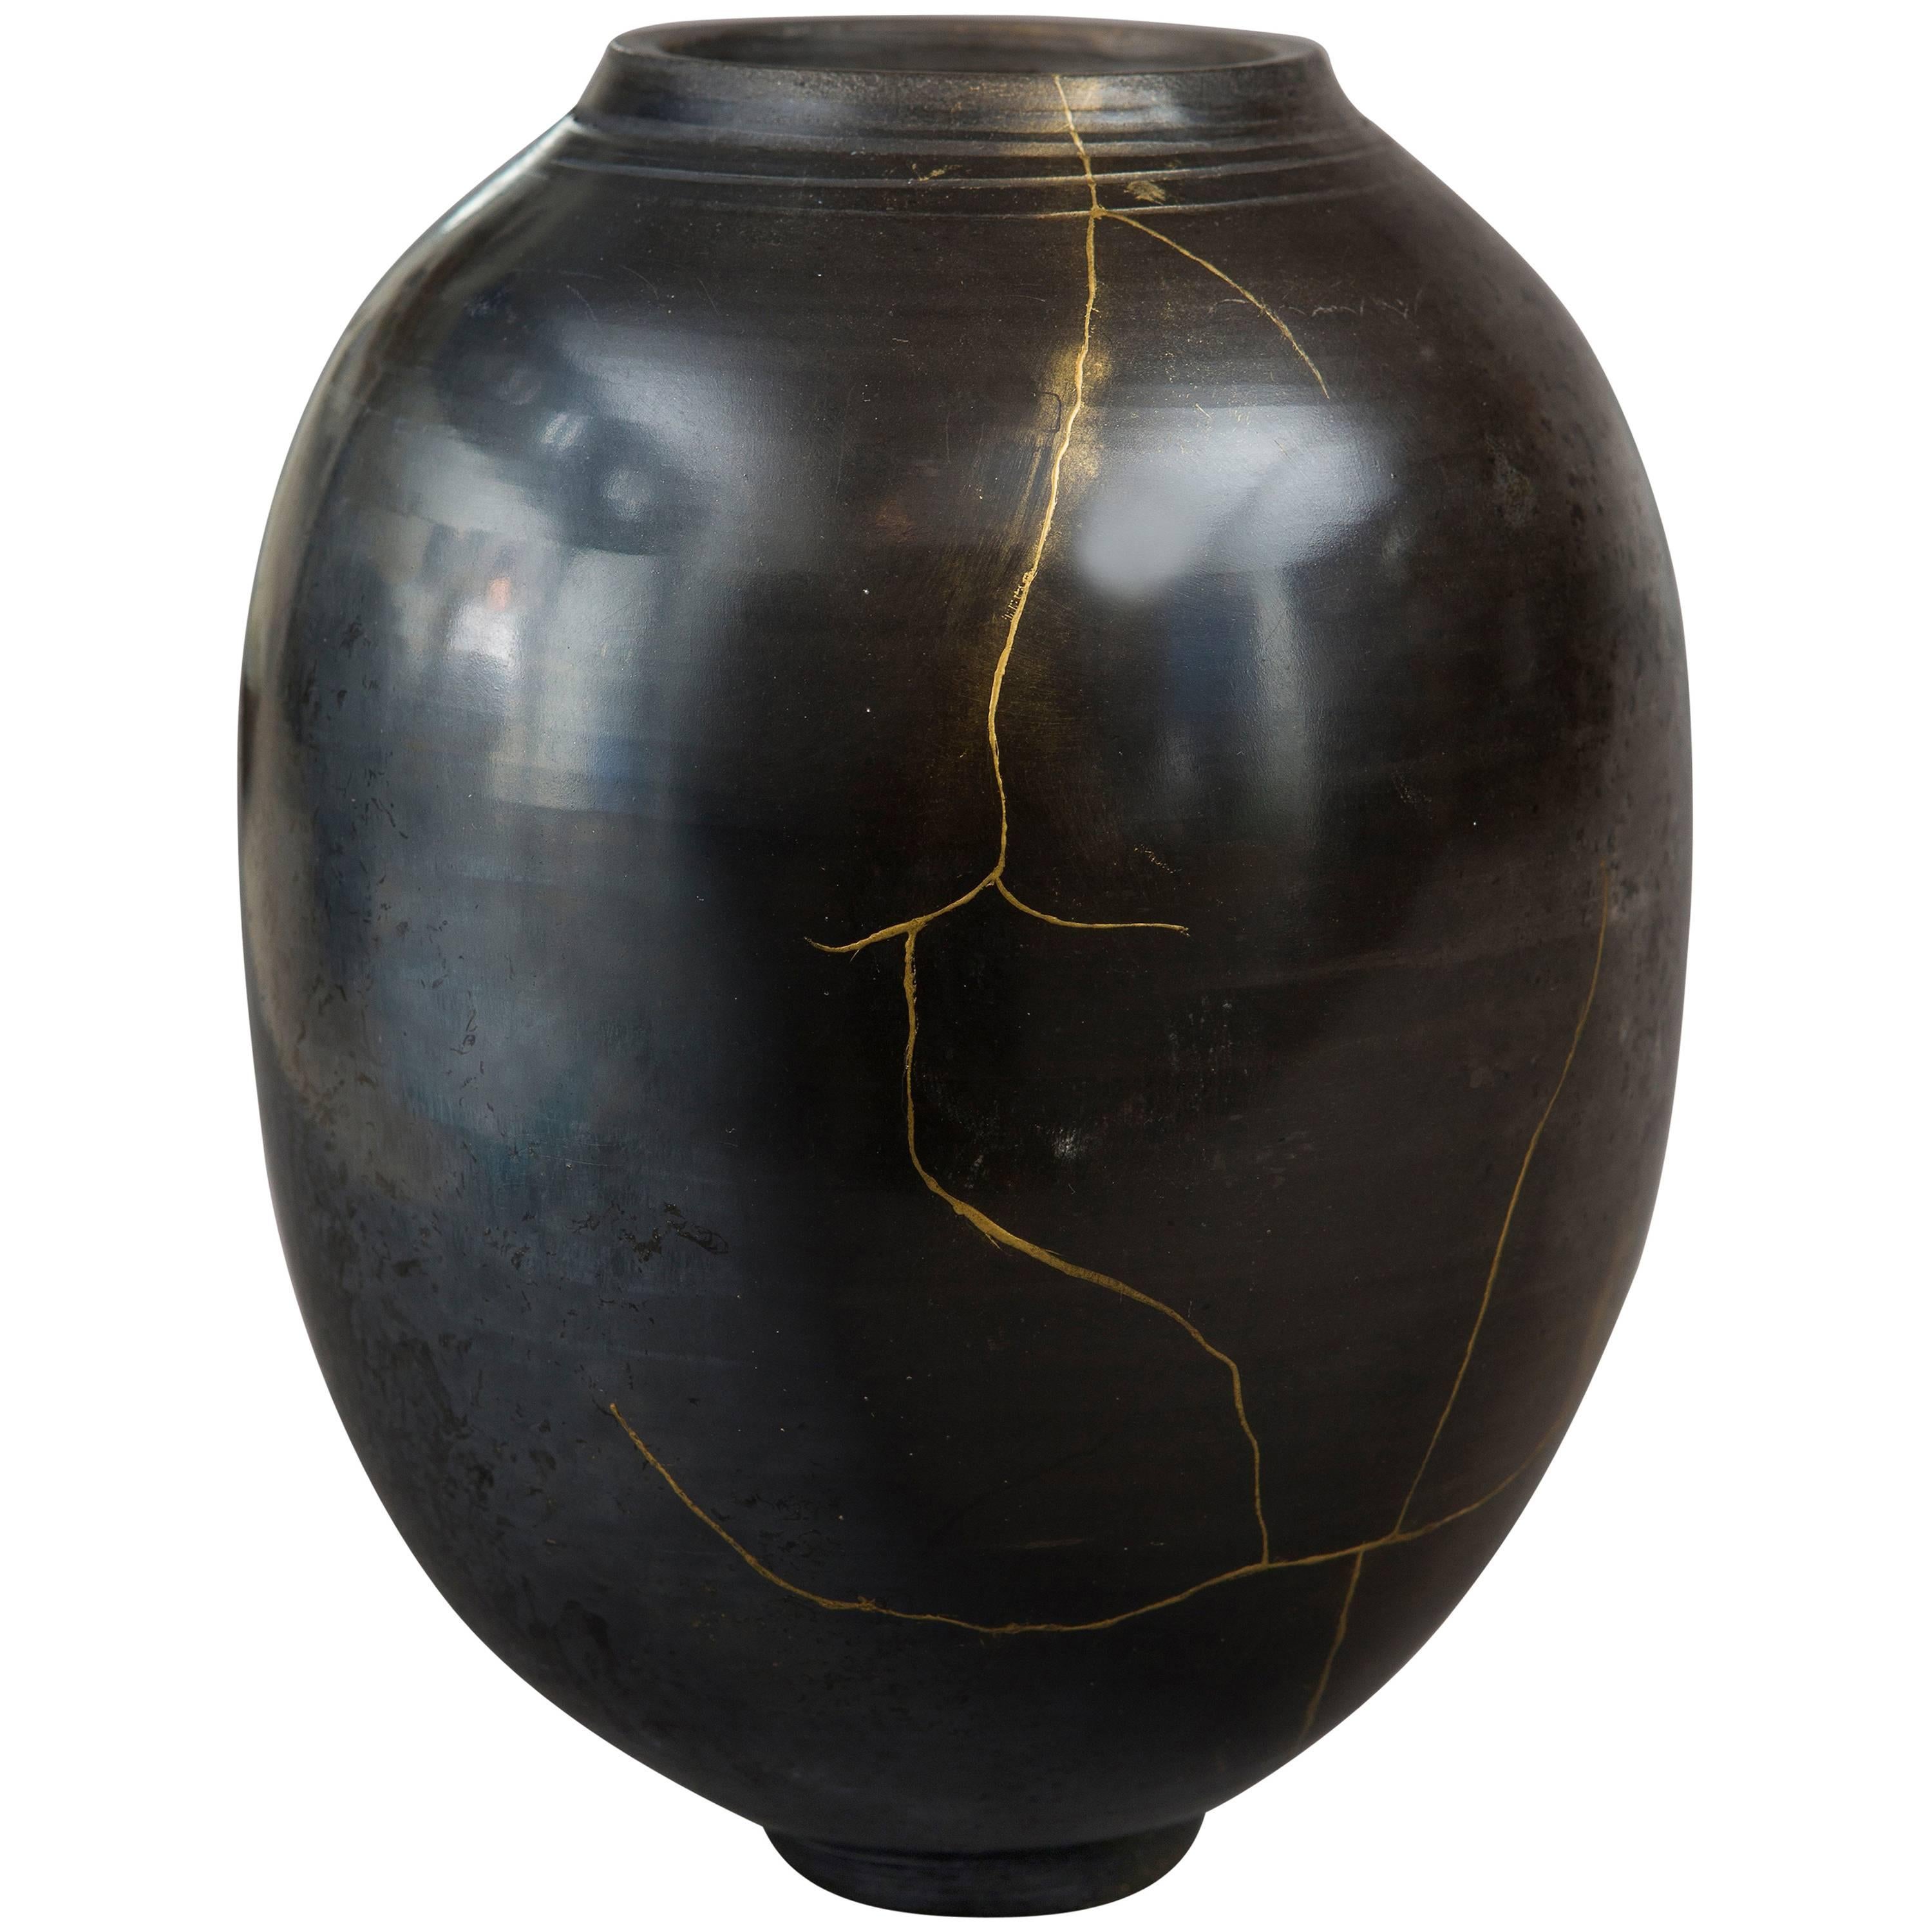 Ceramic and Kintsugi Vase by Karen Swami